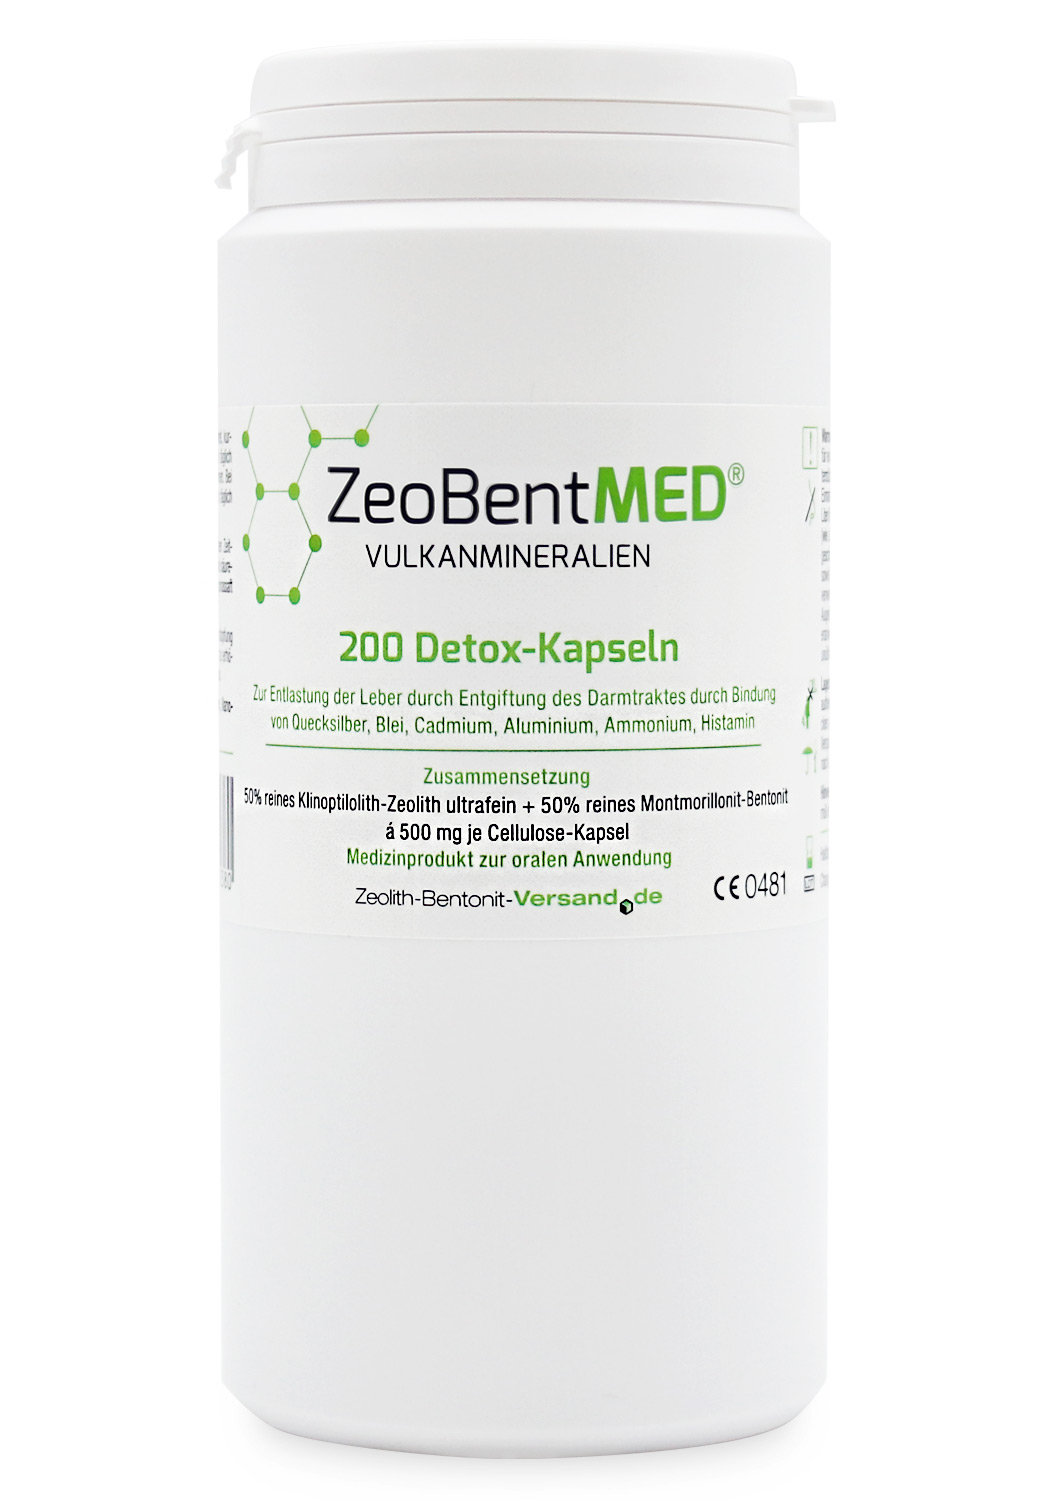 ZeoBentMED® Detox-Kapseln, Zeolith + Bentonit, 200 Stück